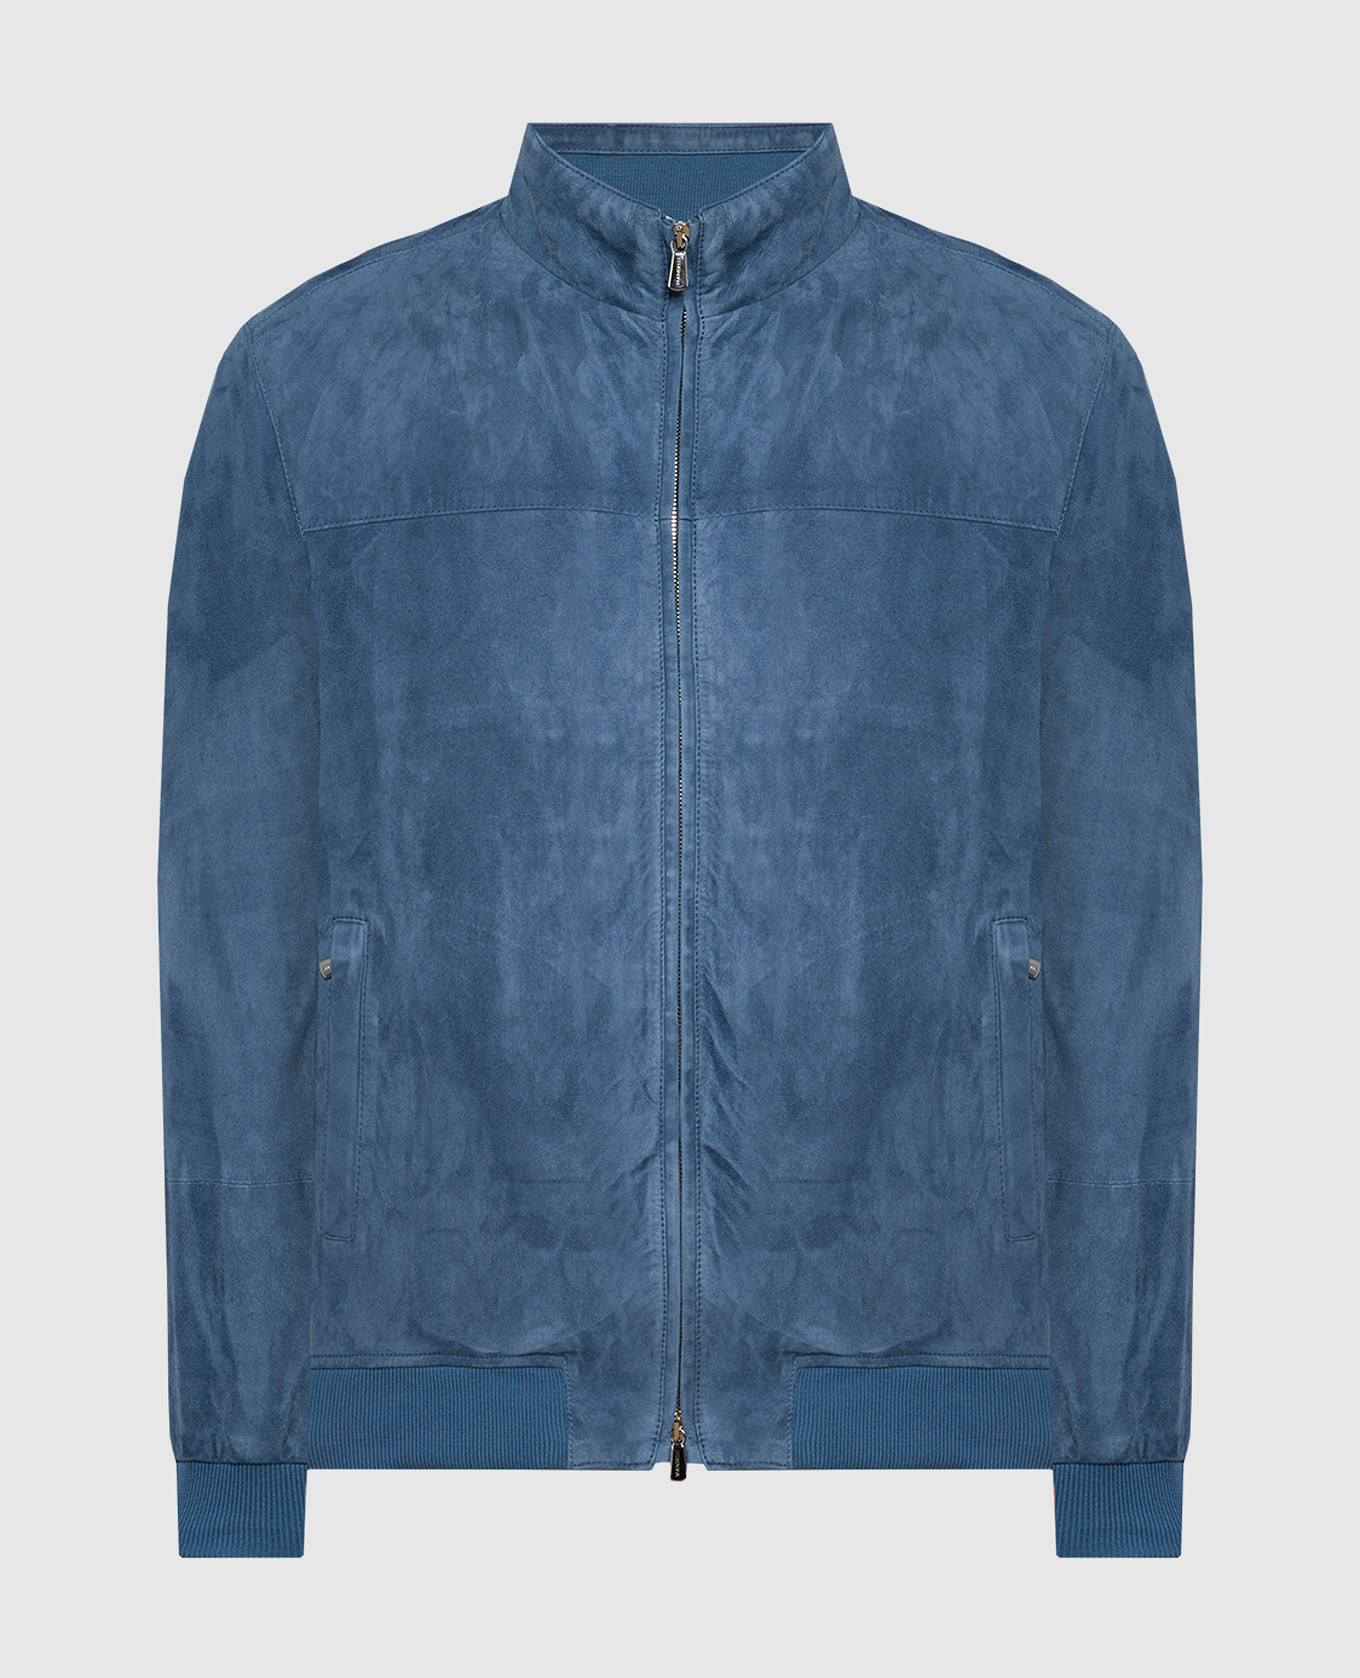 Blue suede jacket